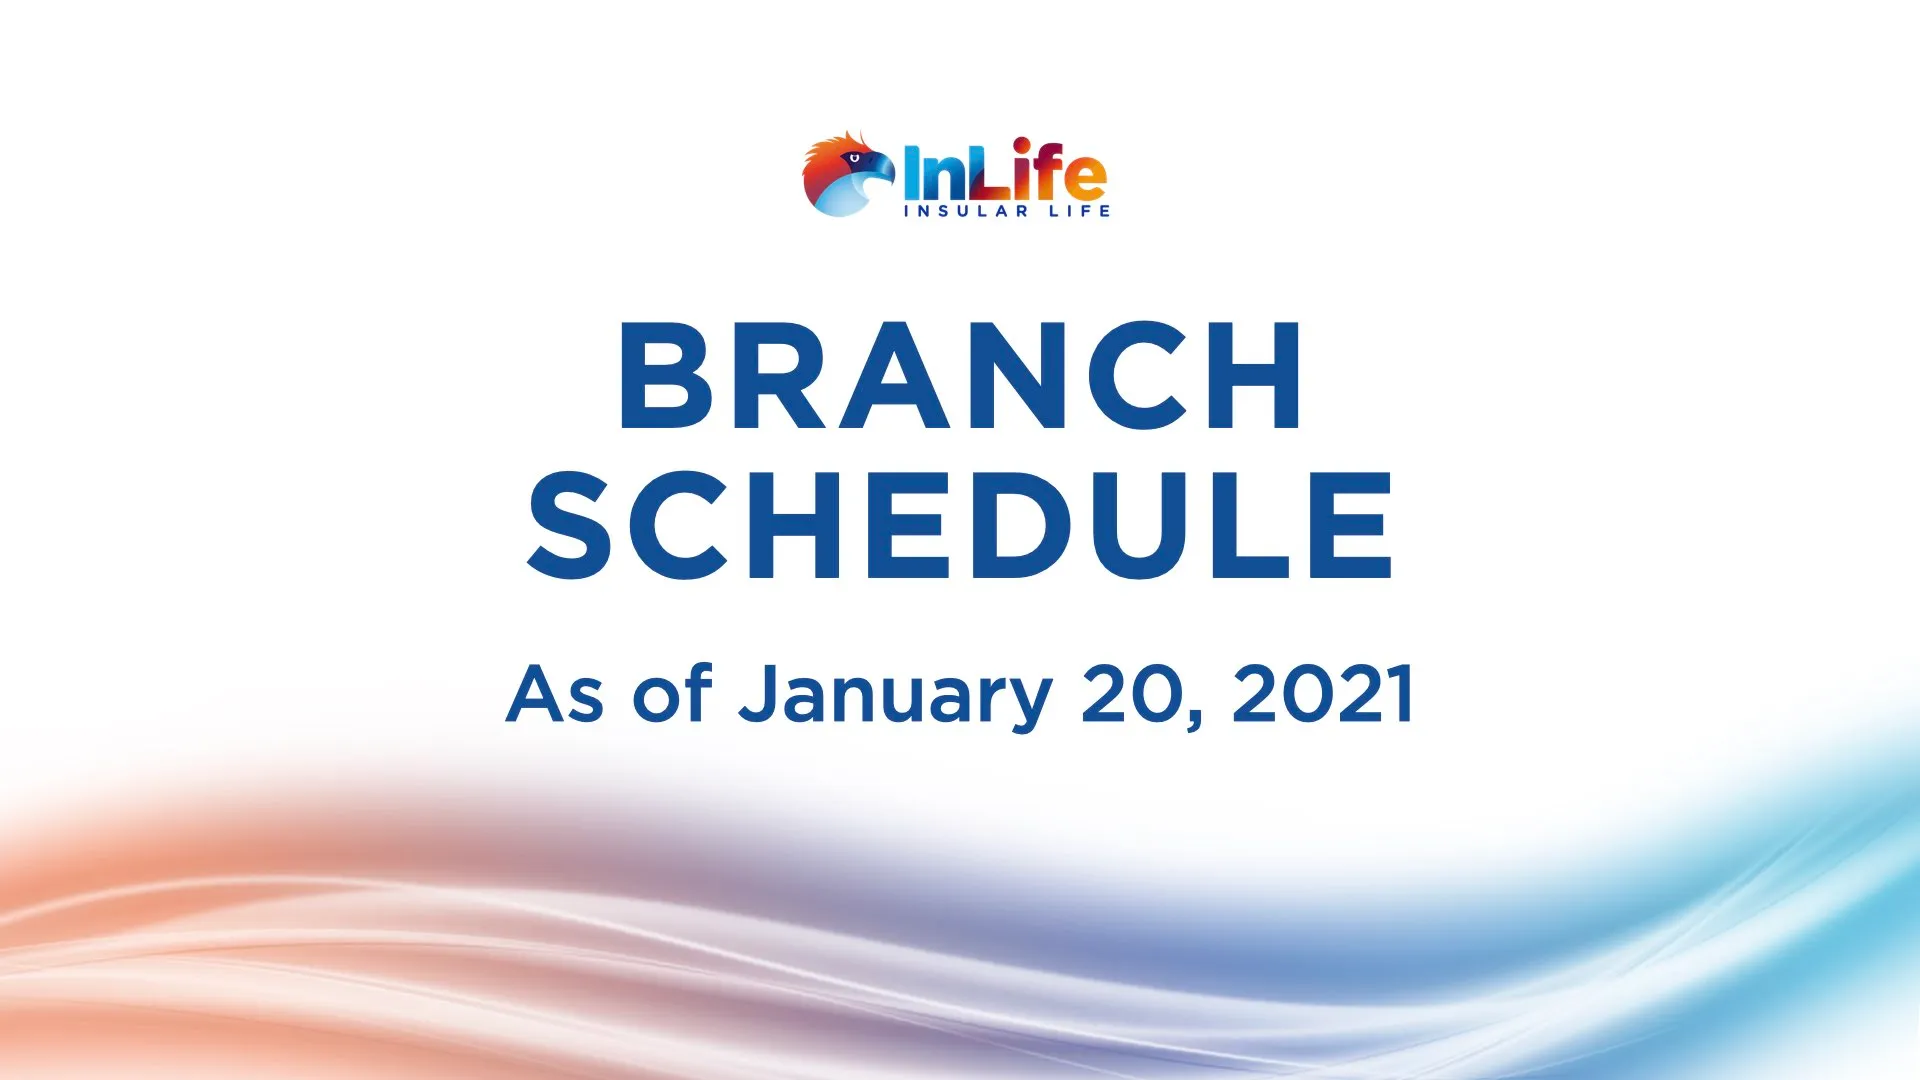 inlife-branch-schedule-as-of-jan-20-2021